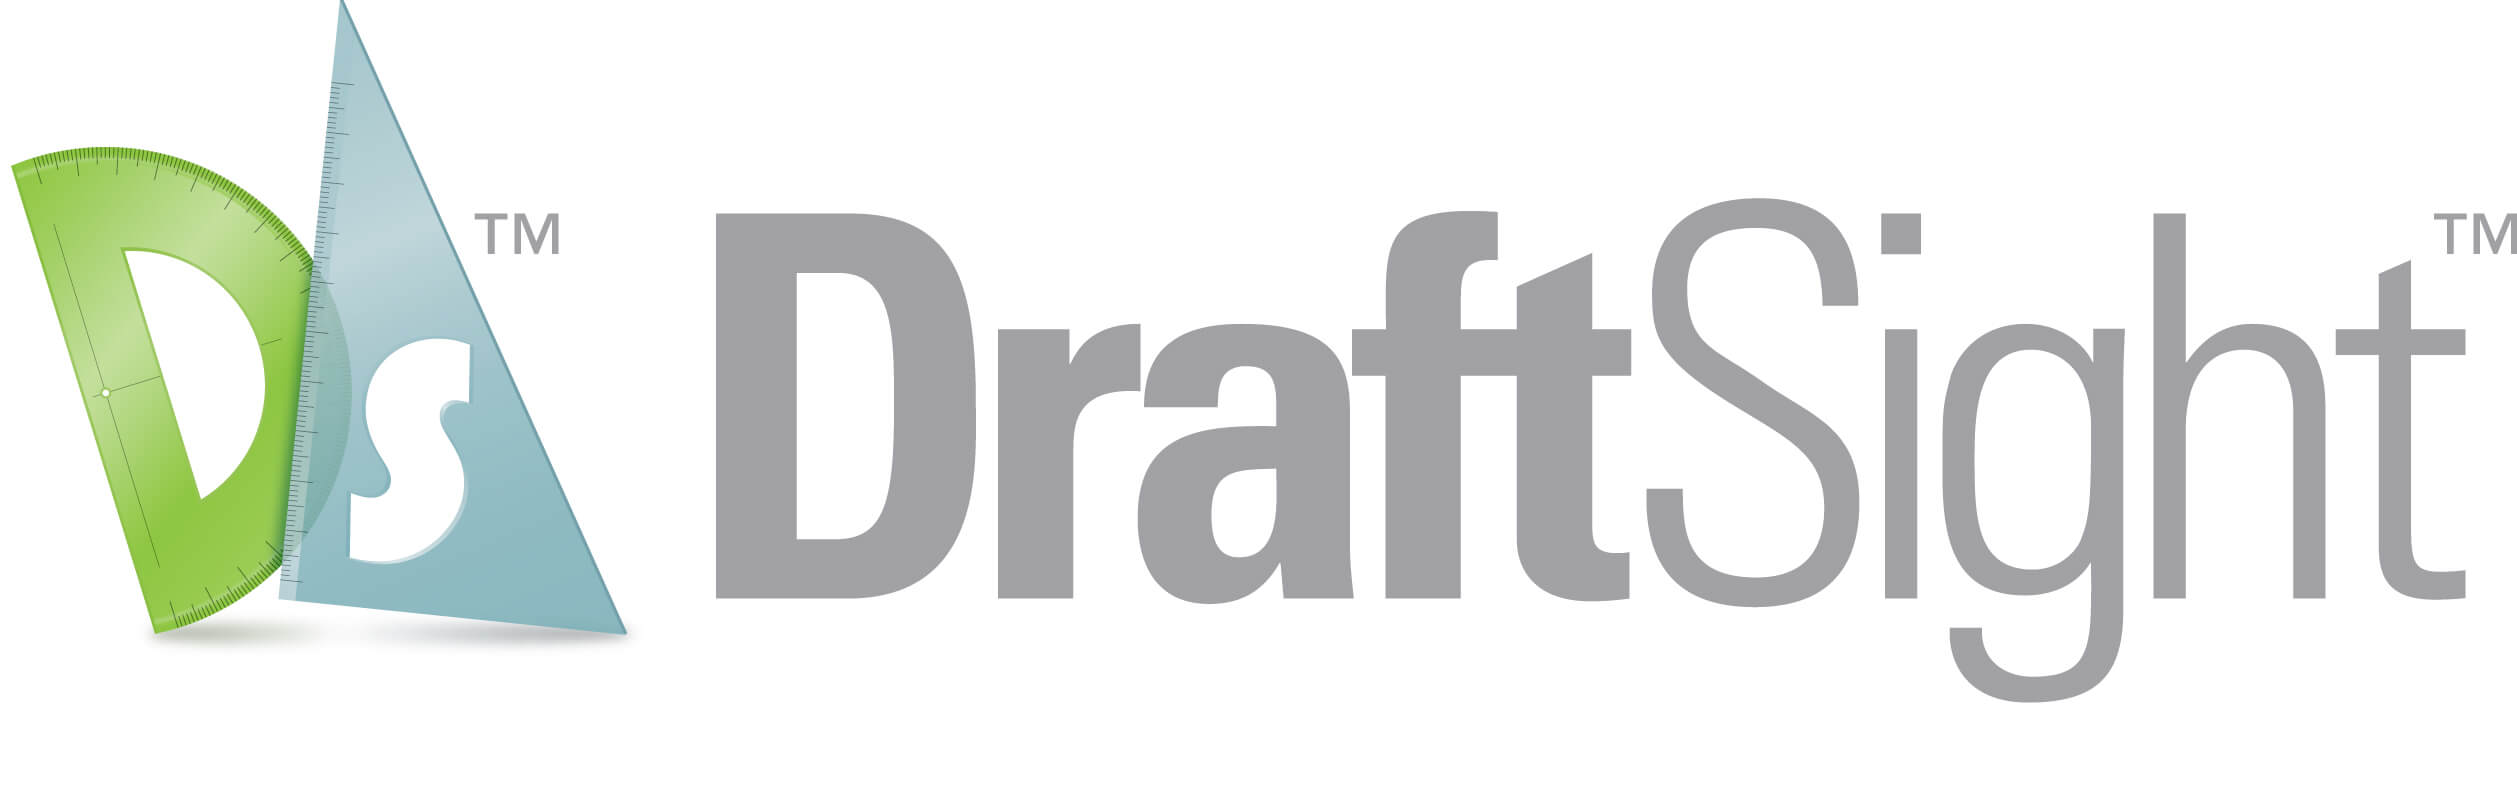 Draftsight logo